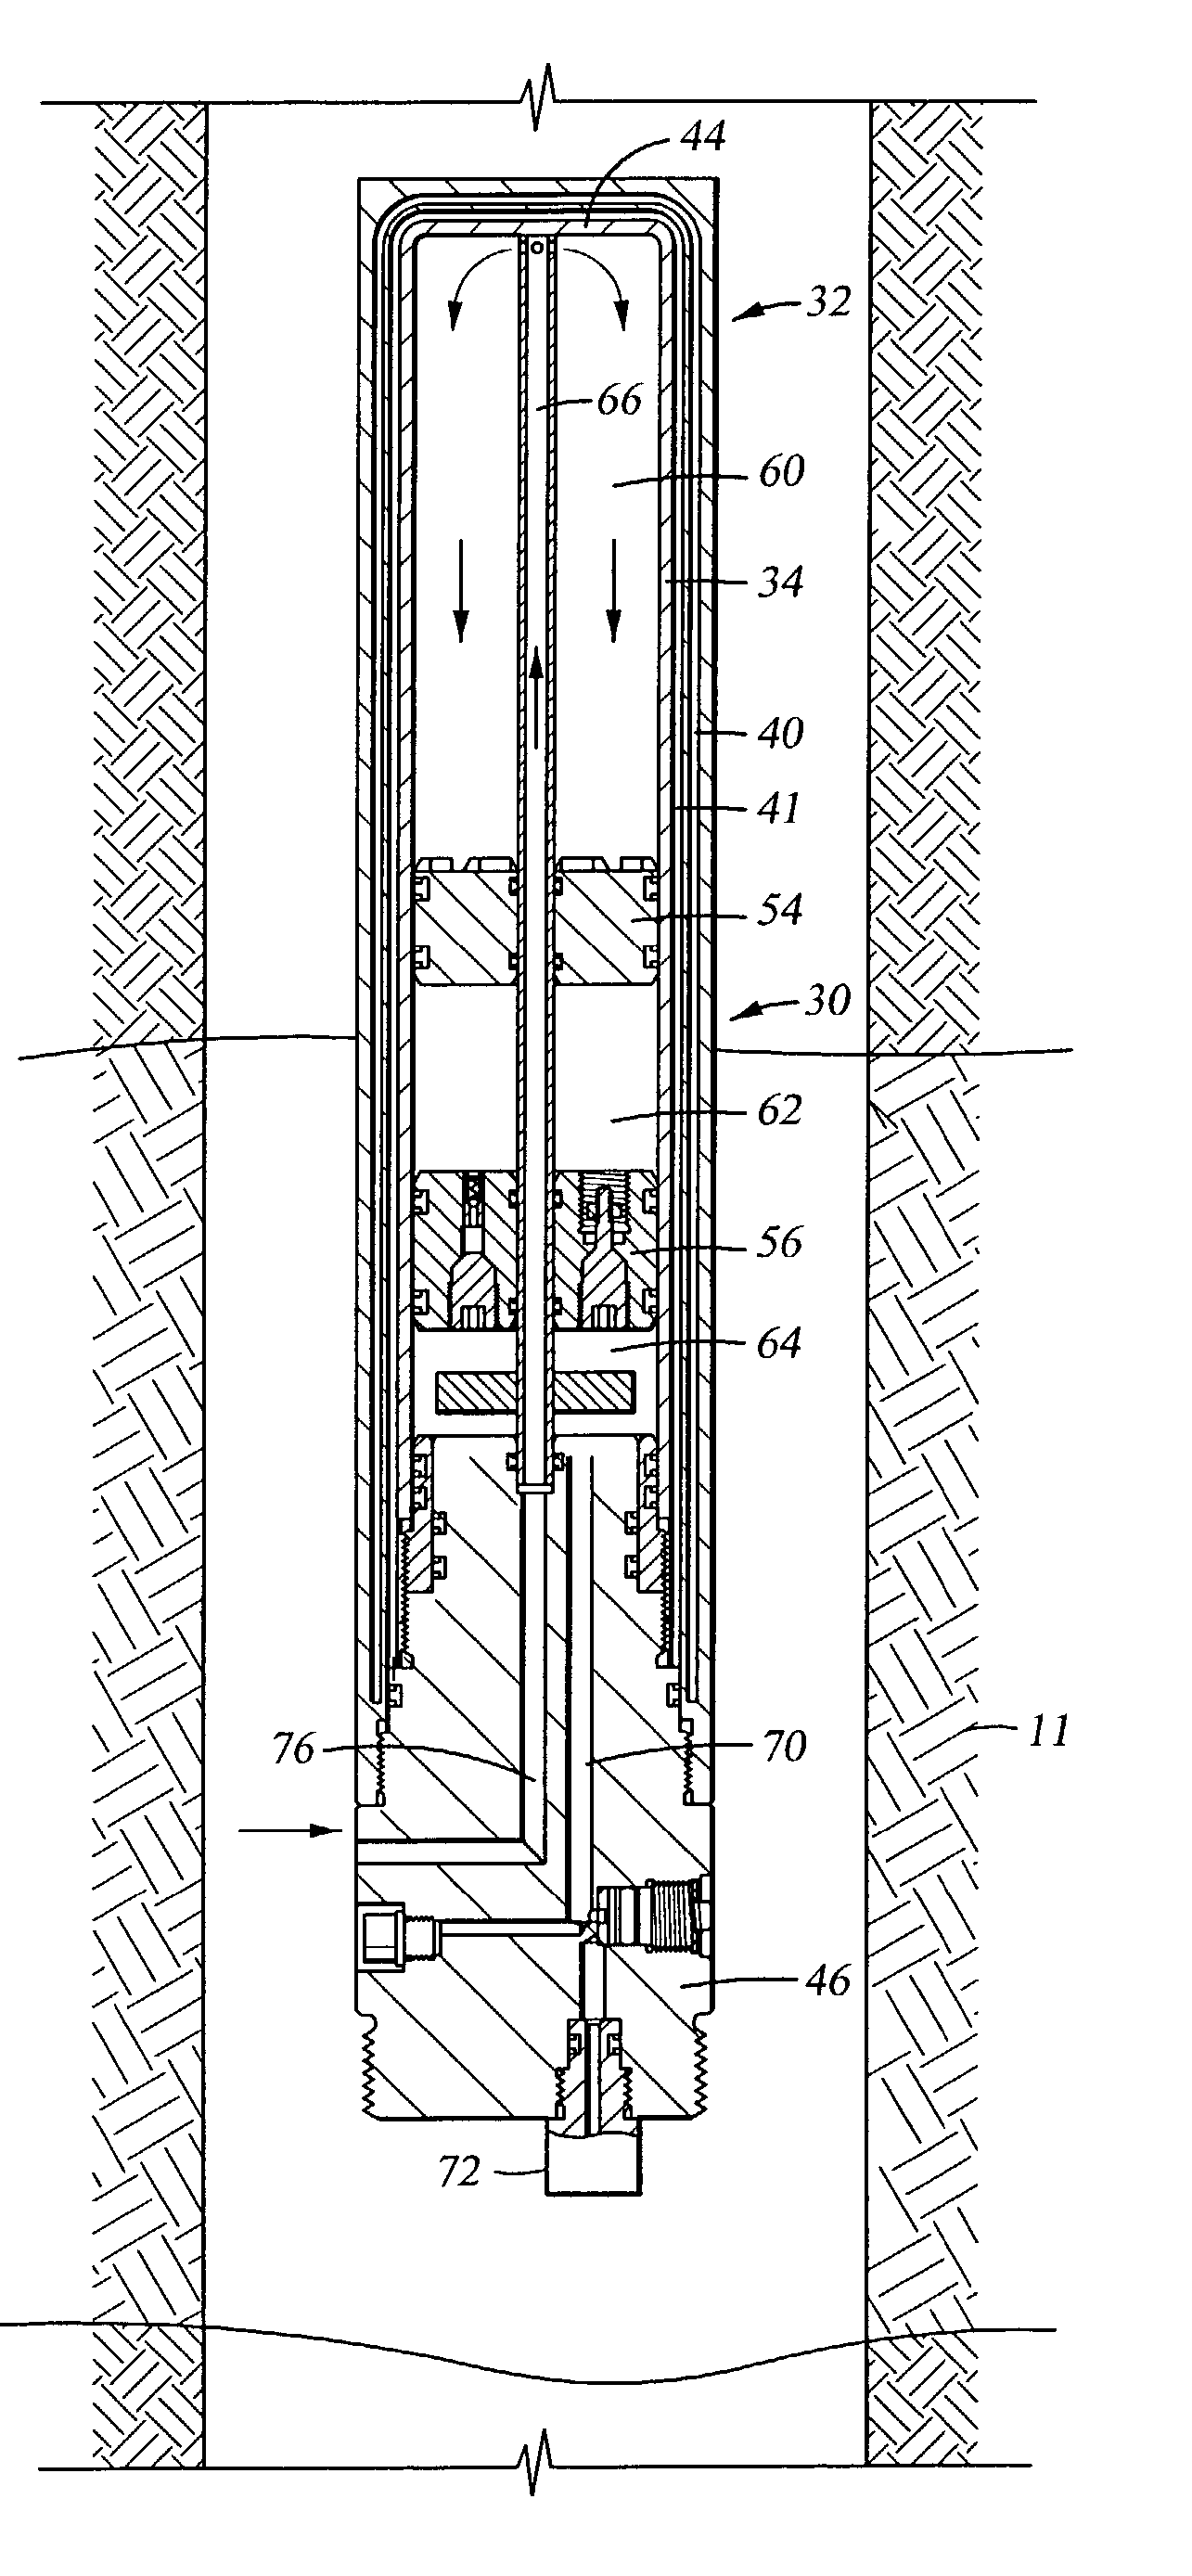 Dual piston, single phase sampling mechanism and procedure